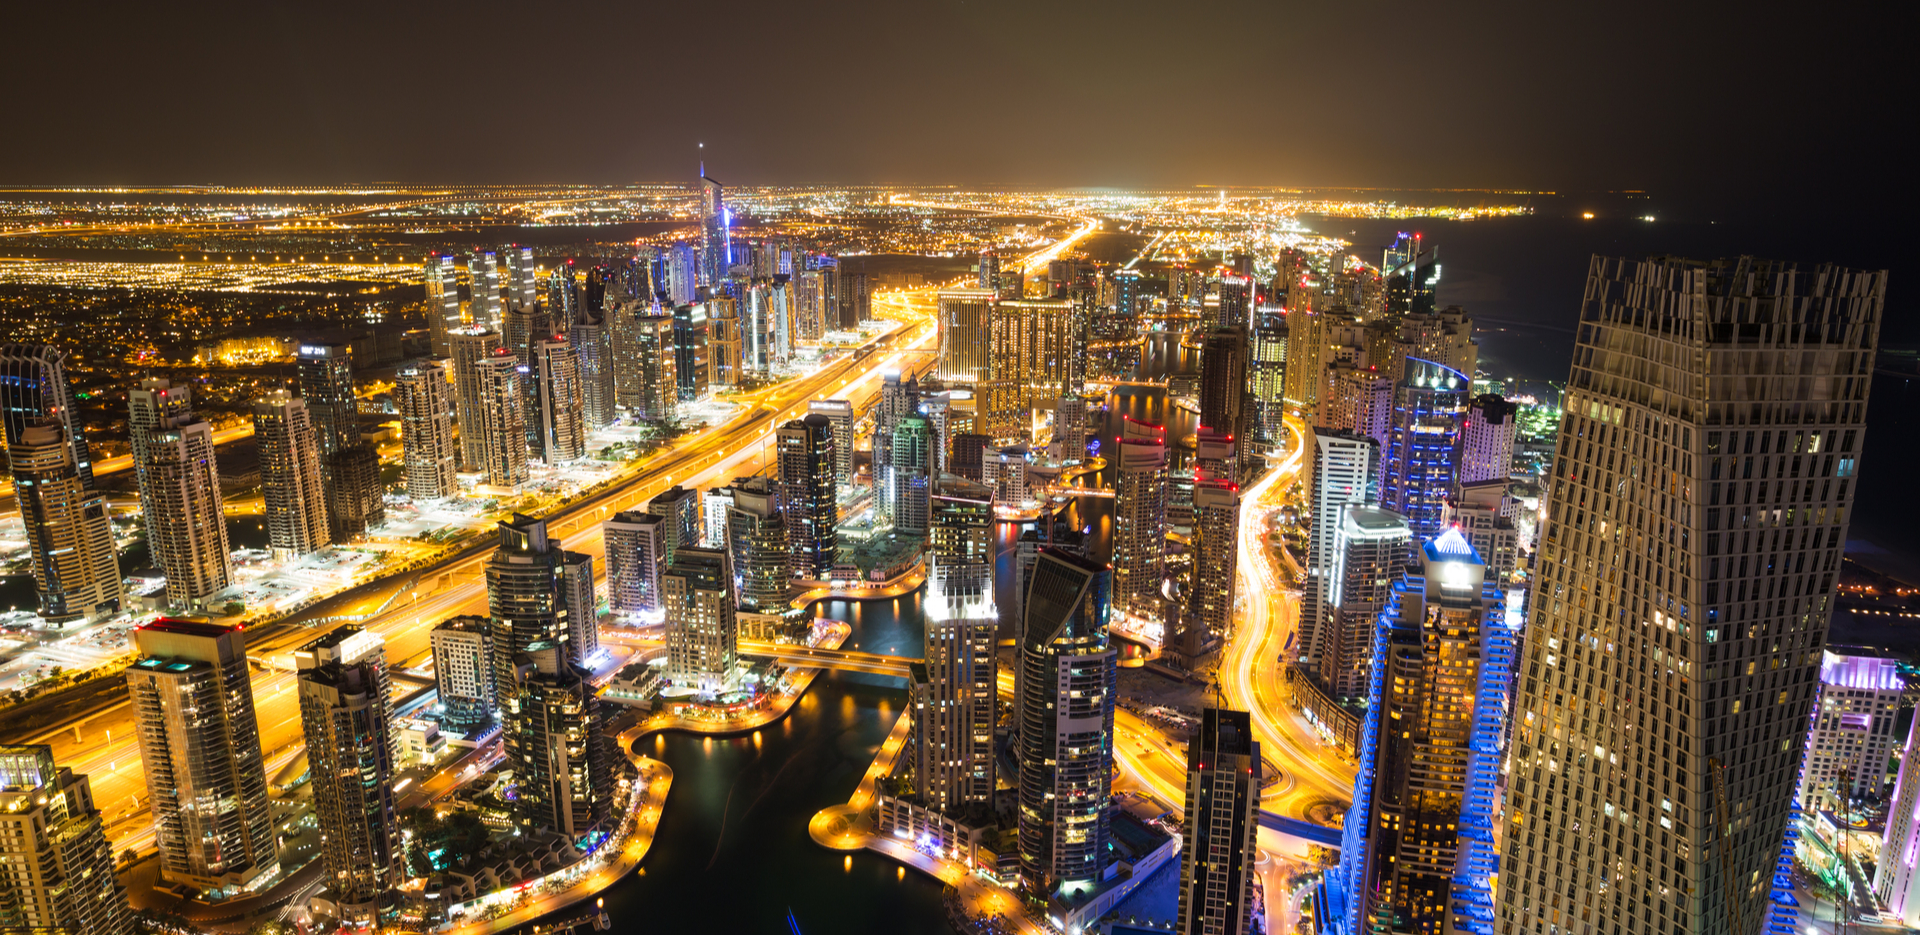 Dubai nightlife